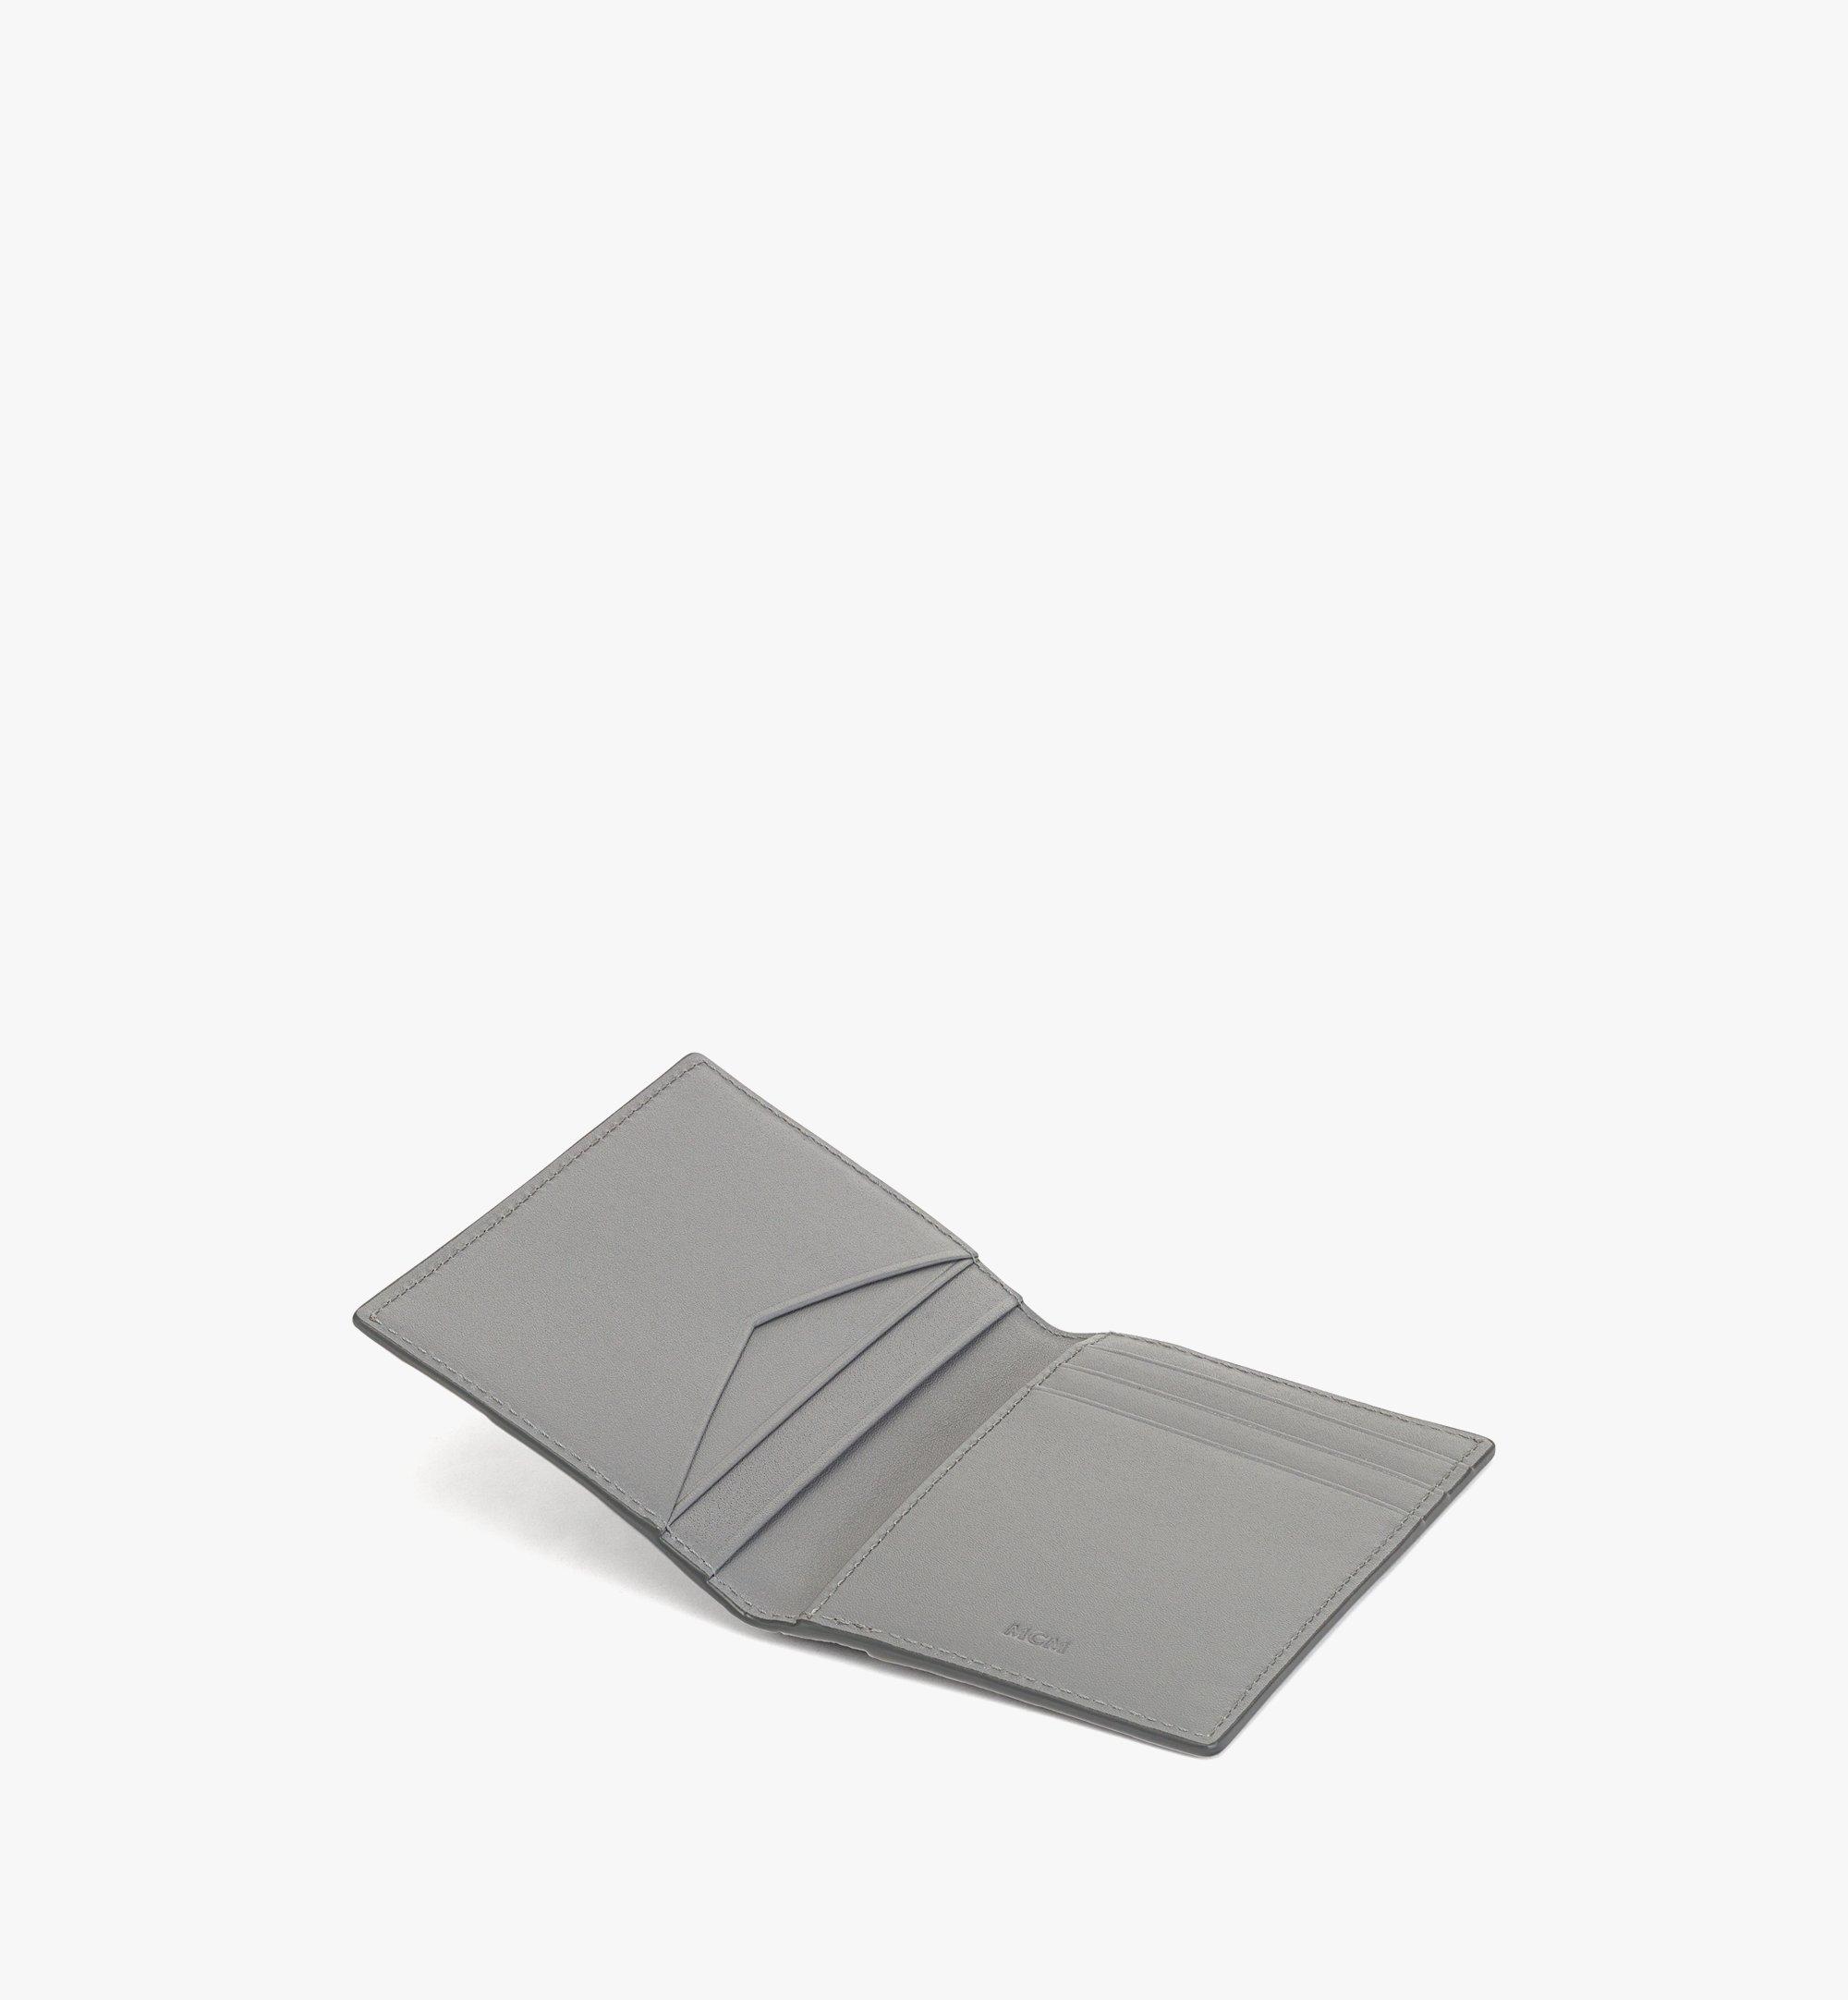 MCM Aren Bifold Card Wallet in Maxi Monogram Leather Grey MXADATA04FN001 Alternate View 1